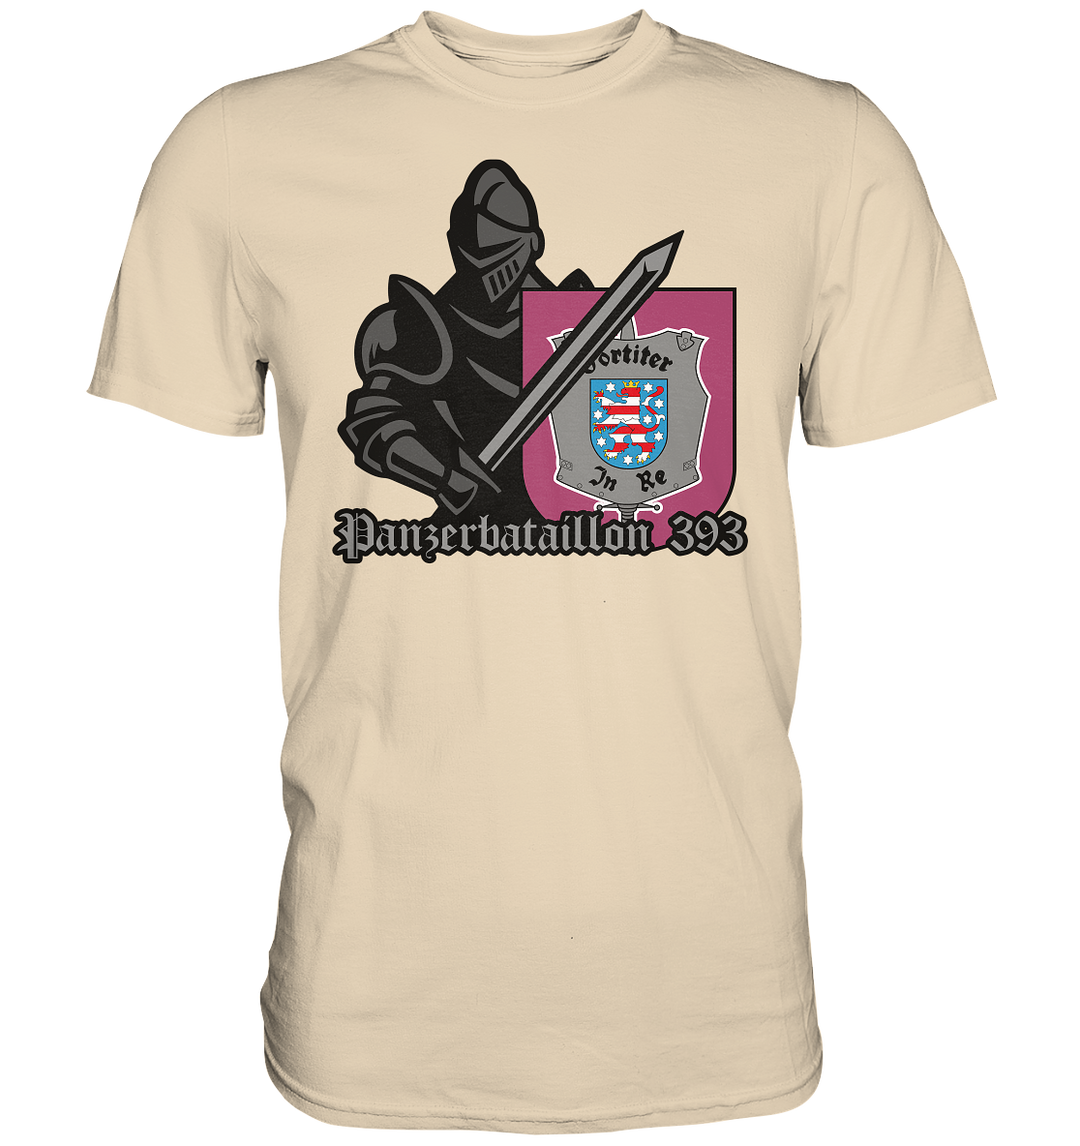 "PzBtl 393 - Ritter" - Premium Shirt